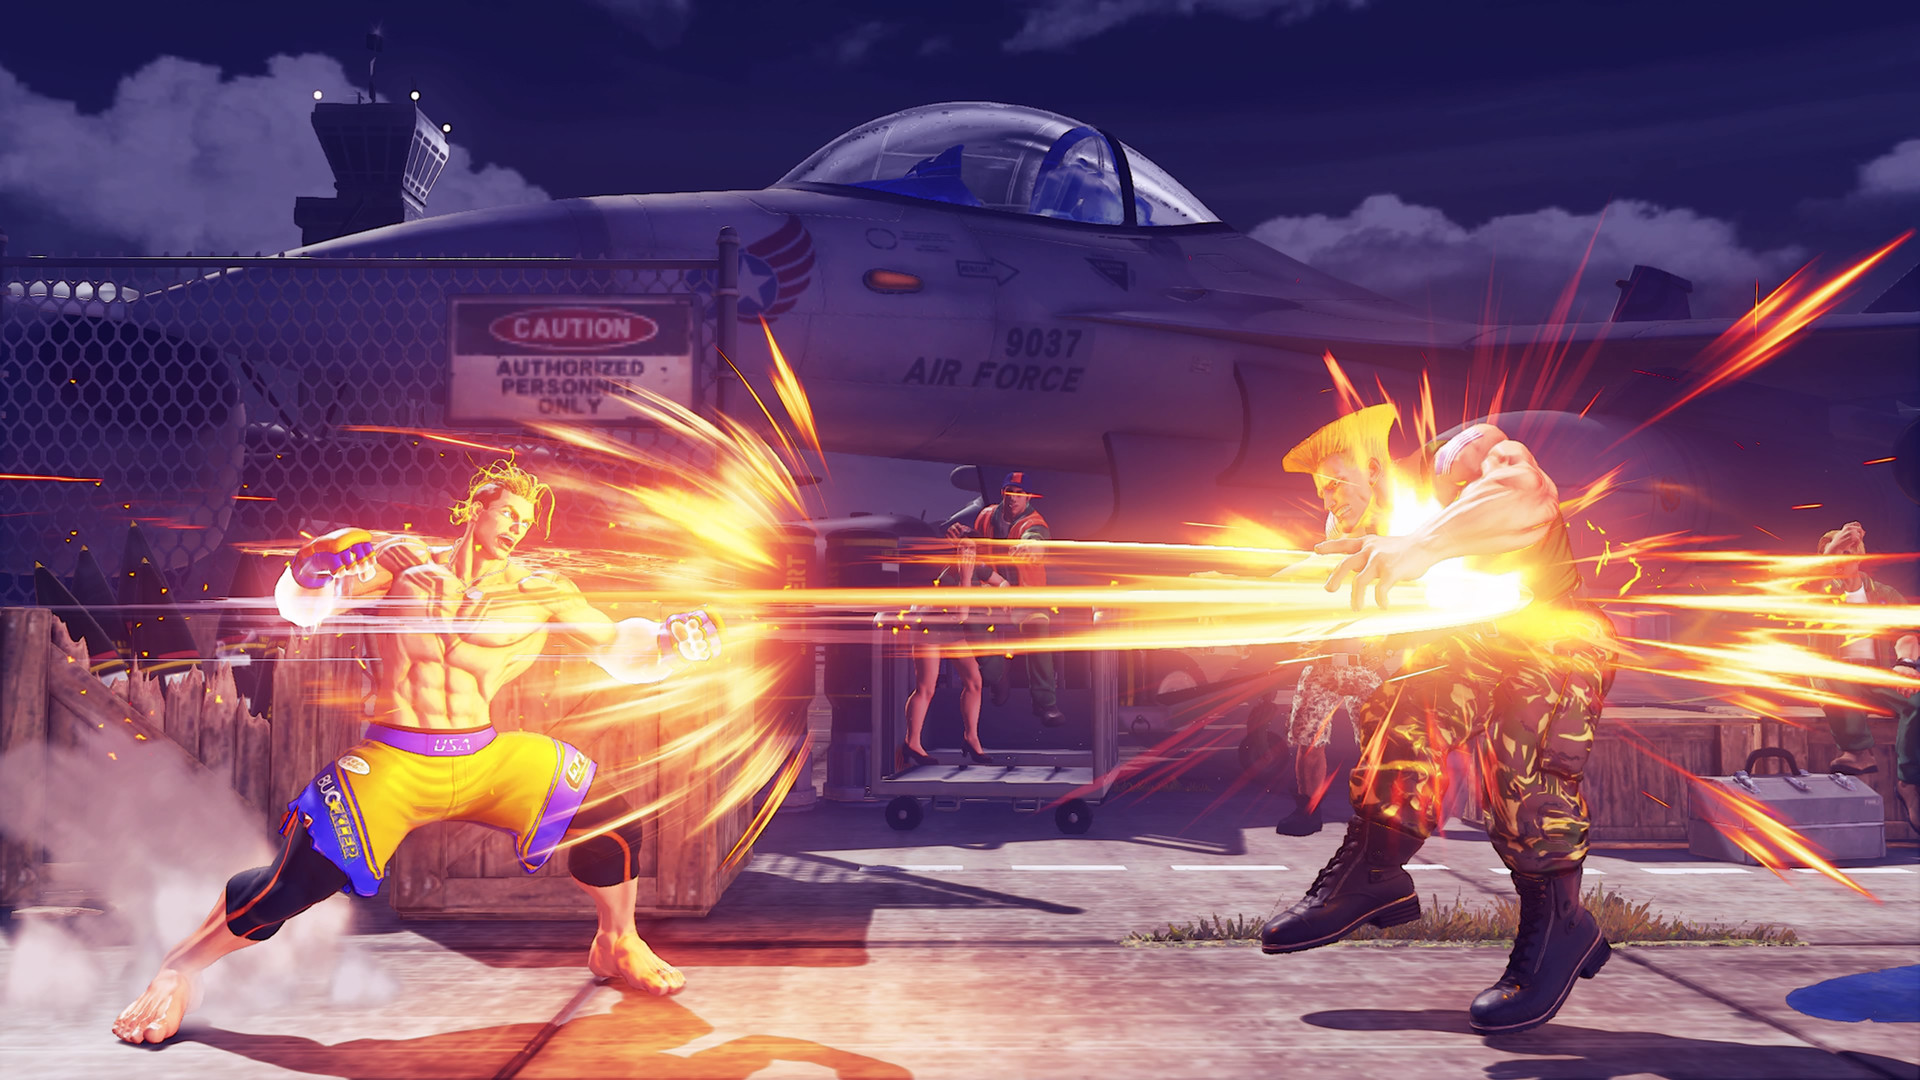 Street Fighter V - Champion Edition Upgrade Kit + Season 5 Premium Pass DLC Bundle Steam CD Key